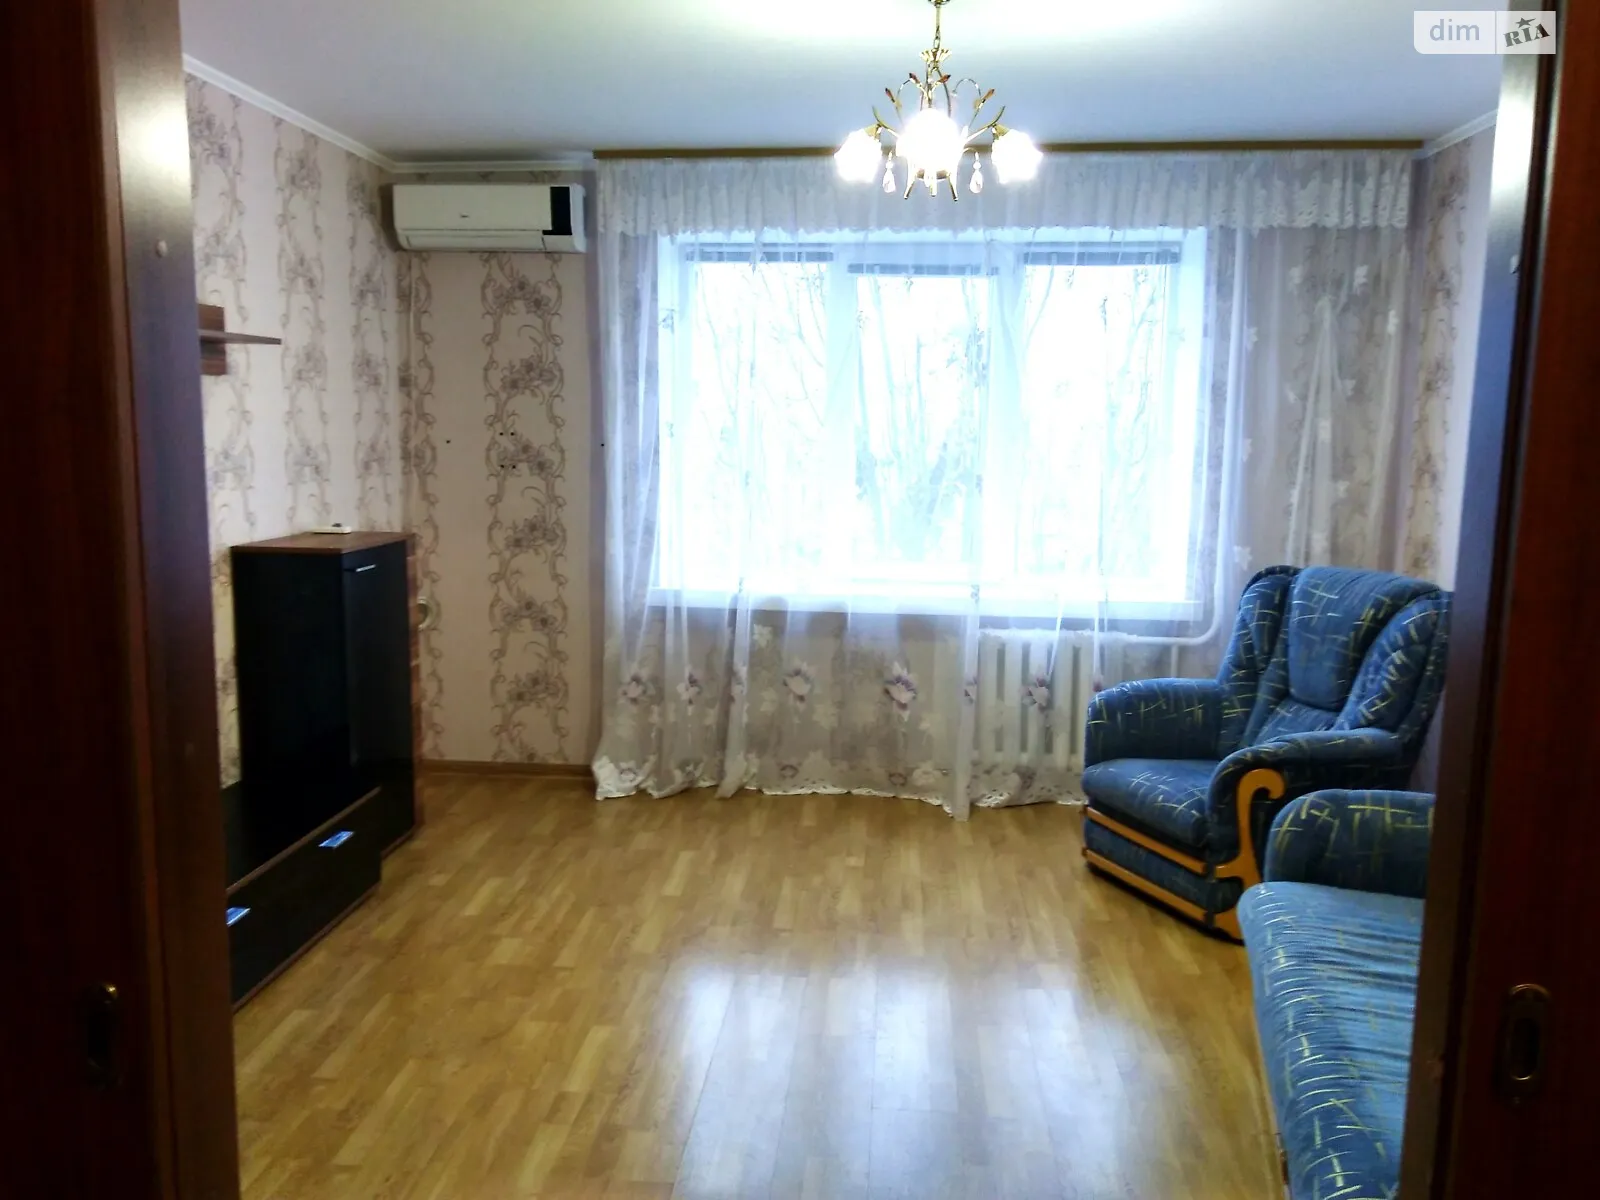 Сдается в аренду 2-комнатная квартира 55 кв. м в Николаеве, ул. Январева, 28 - фото 1